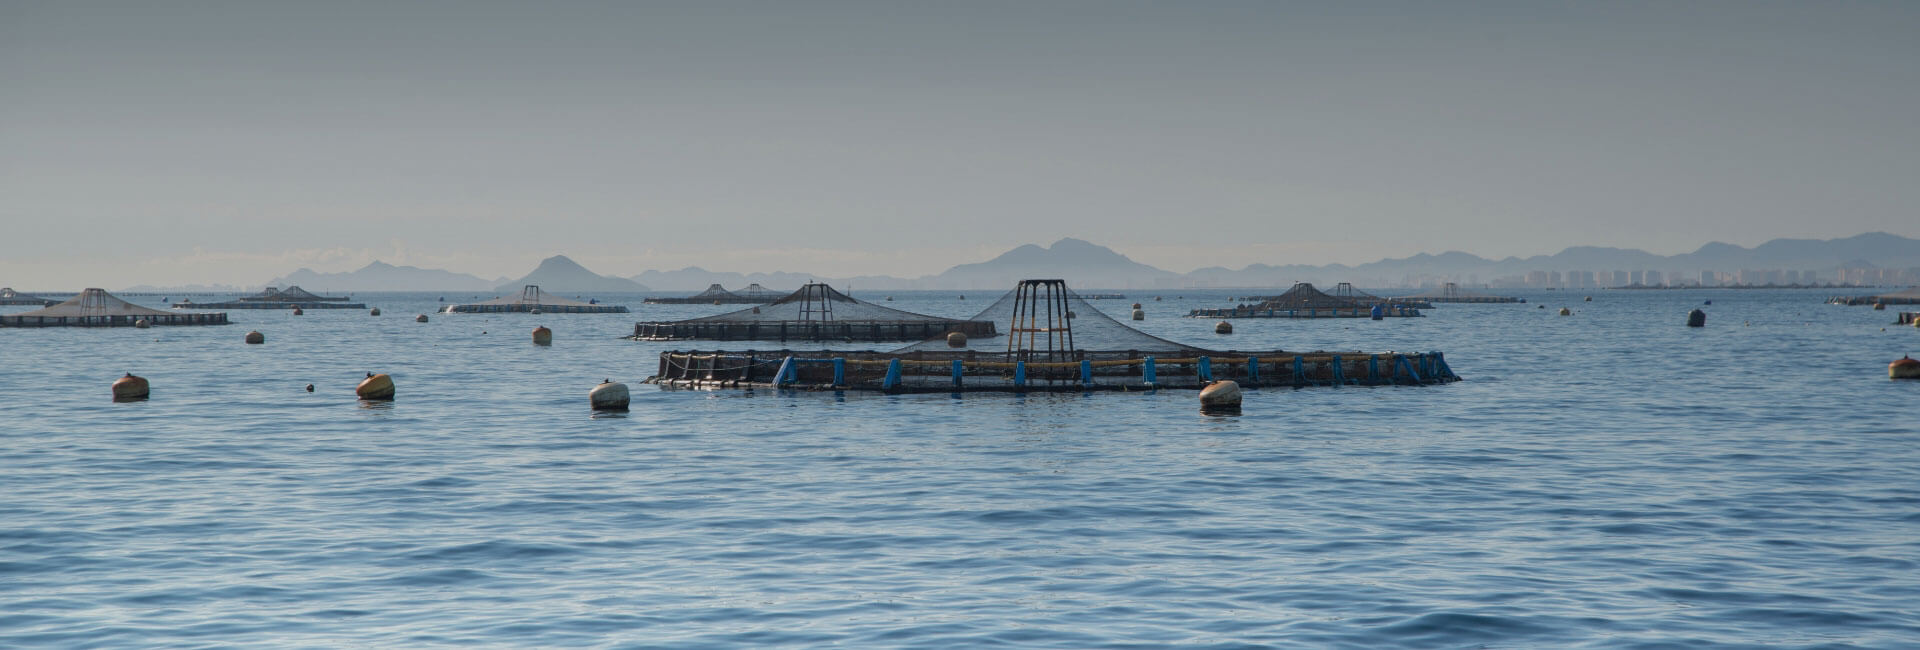 World Maritime University Salmon Aquaculture Study thumbnail